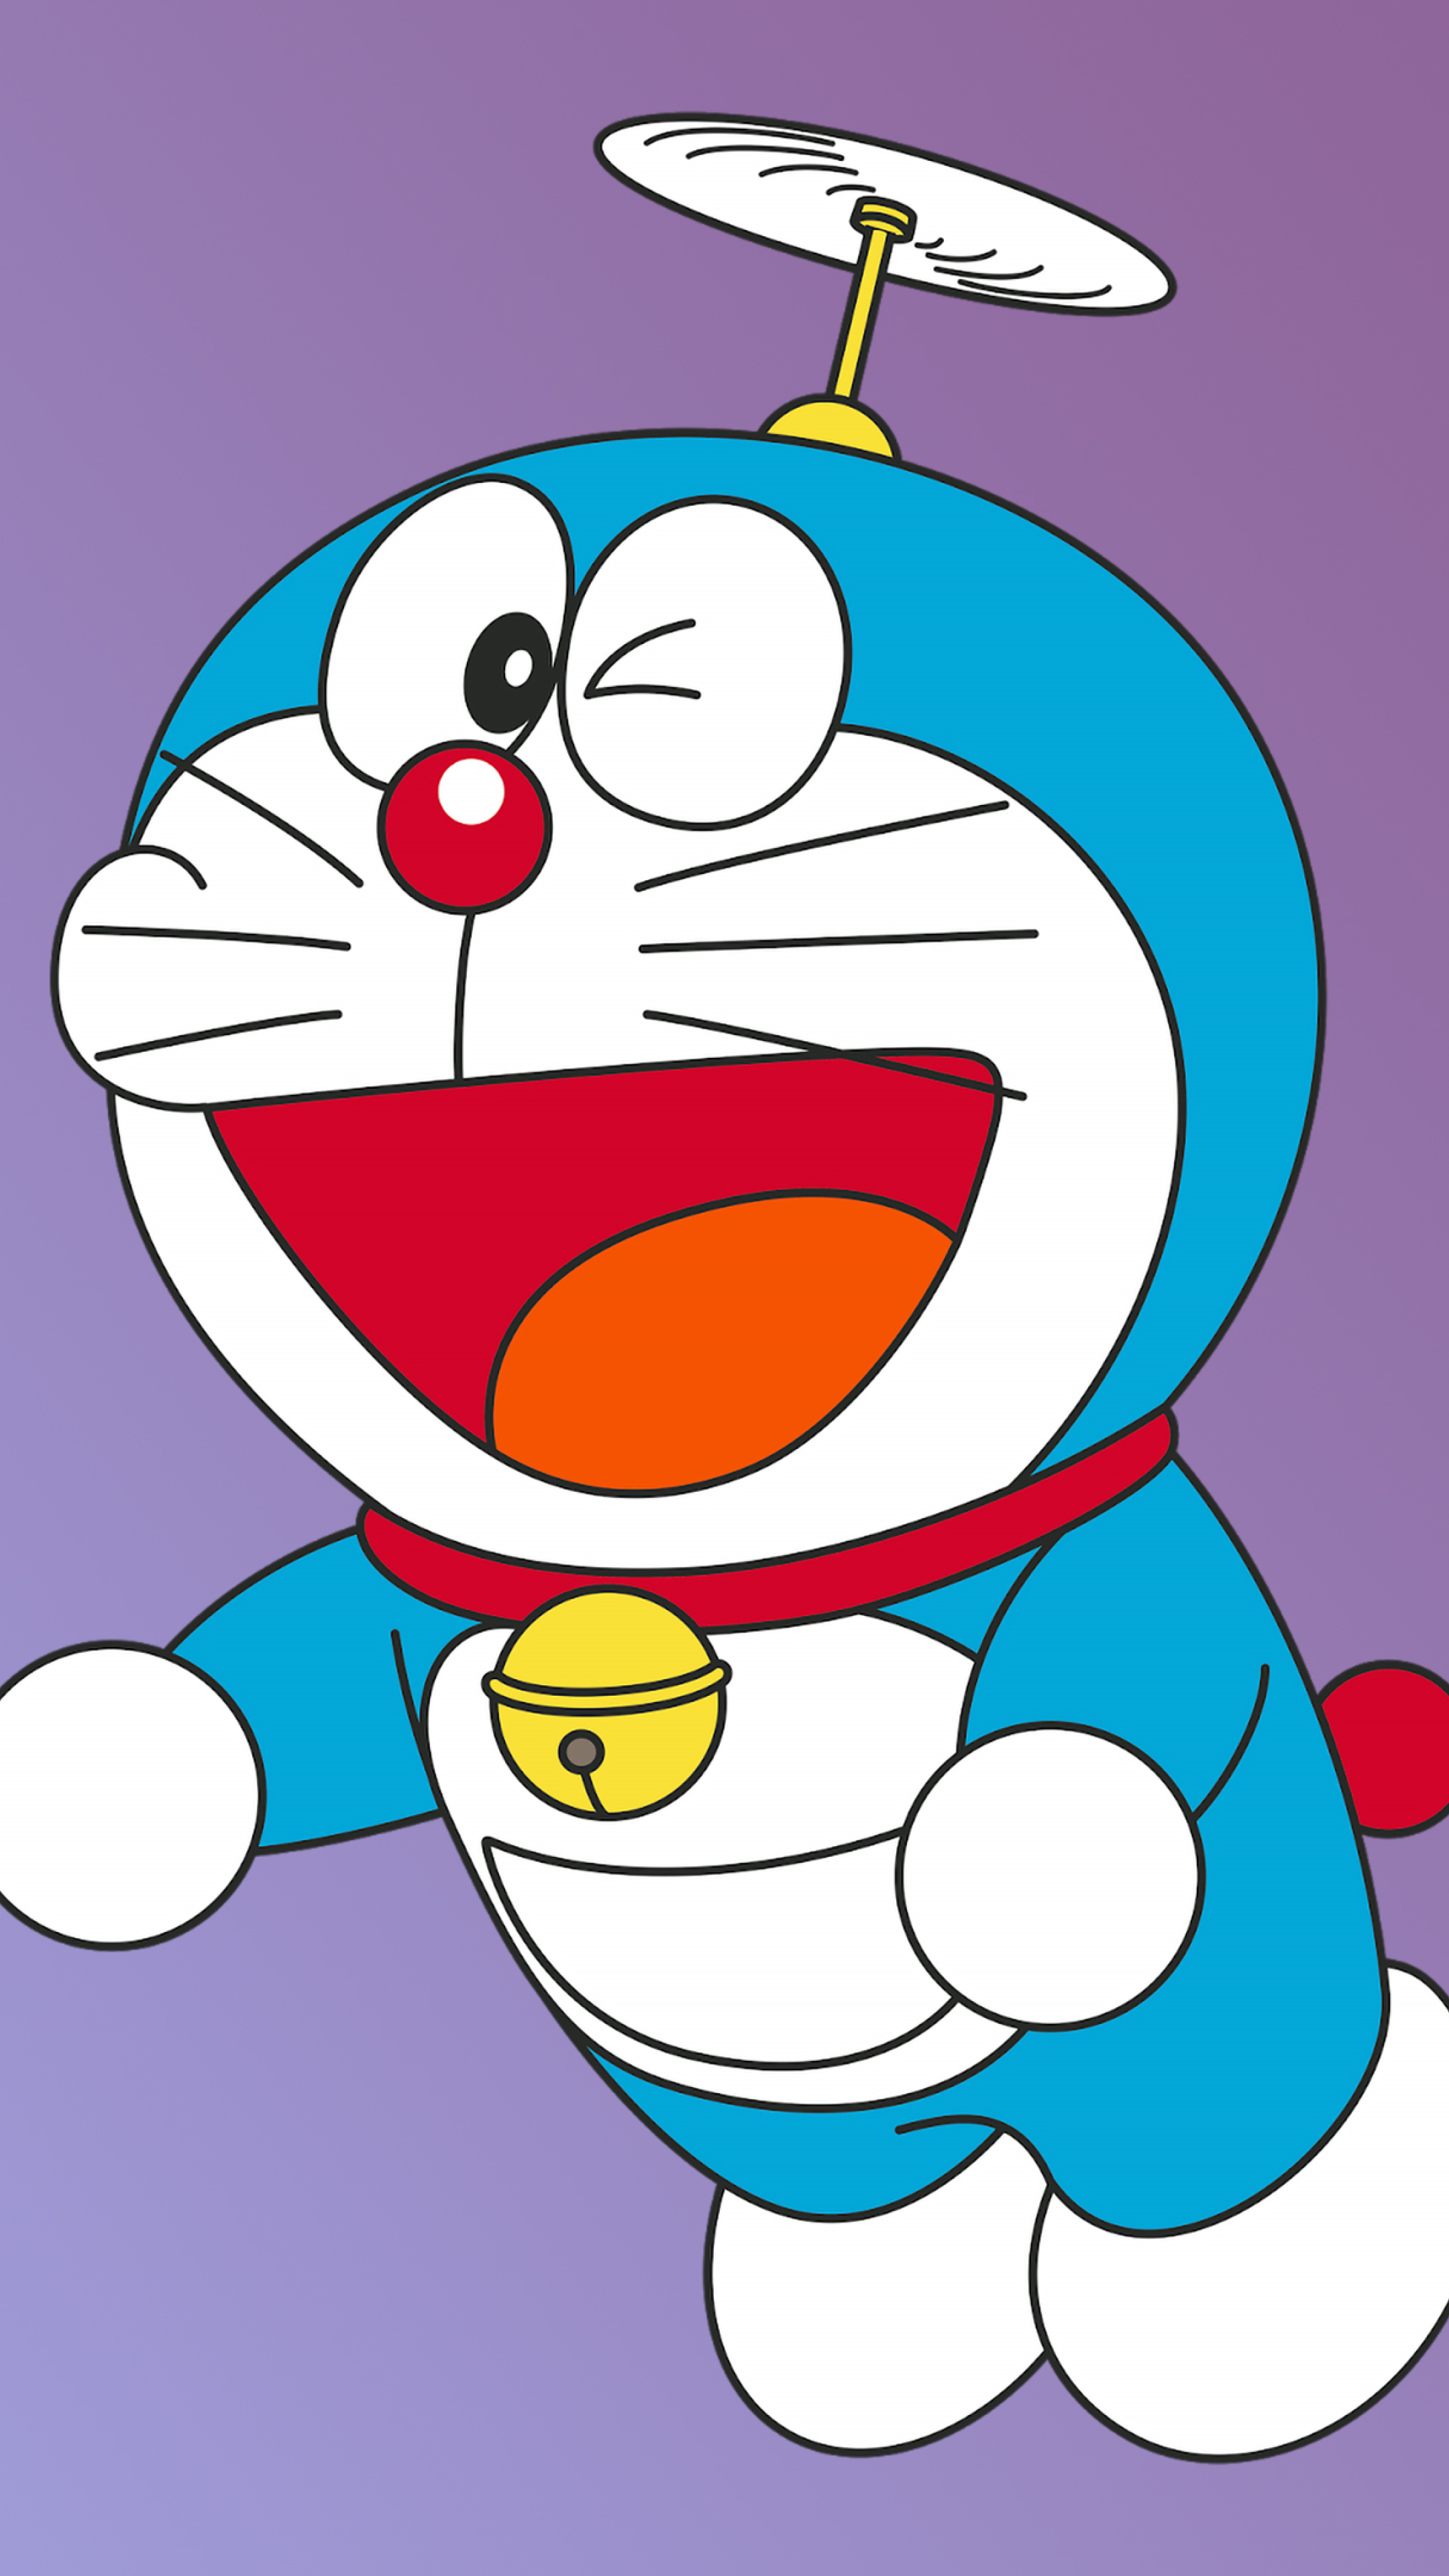 2160x3840 Doraemon Minimal 4K Sony Xperia X,XZ,Z5 Premium Wallpaper, HD  Cartoon 4K Wallpapers, Images, Photos and Background - Wallpapers Den